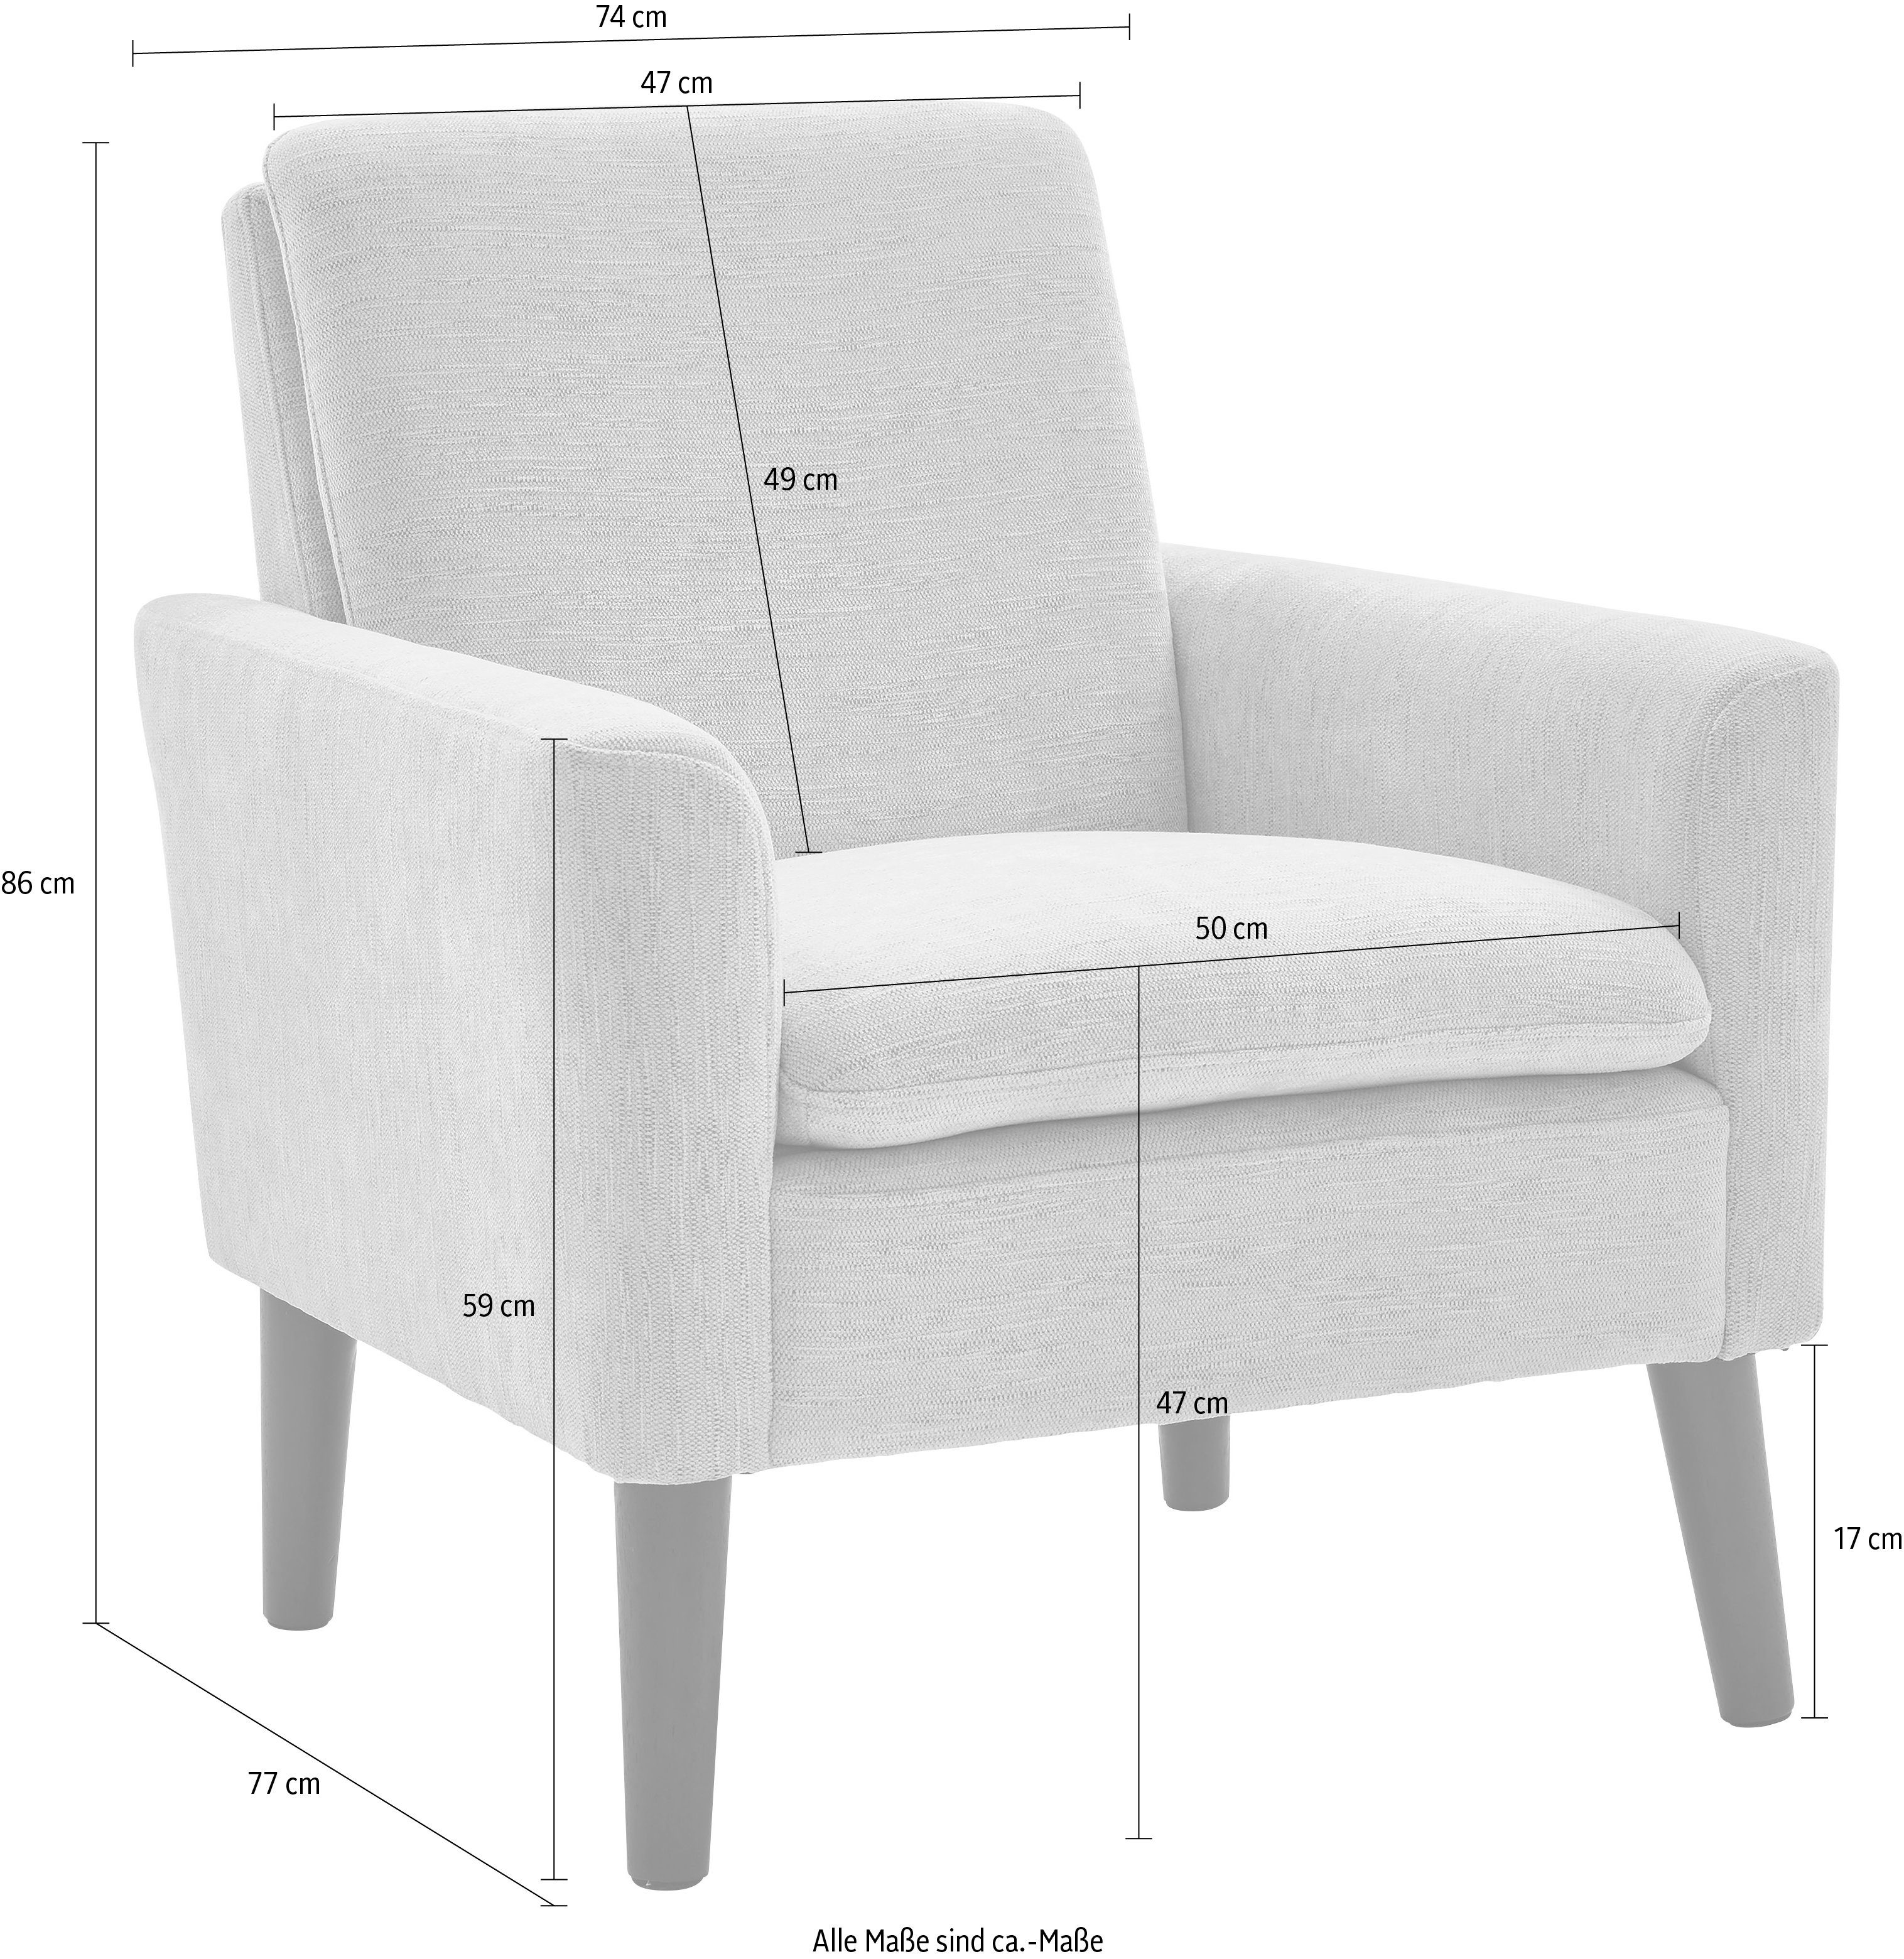 ATLANTIC home collection Sessel Kimmy, Sitzkomfort frei hoher stellbar, mit Chenille-Bezug, im creme Raum